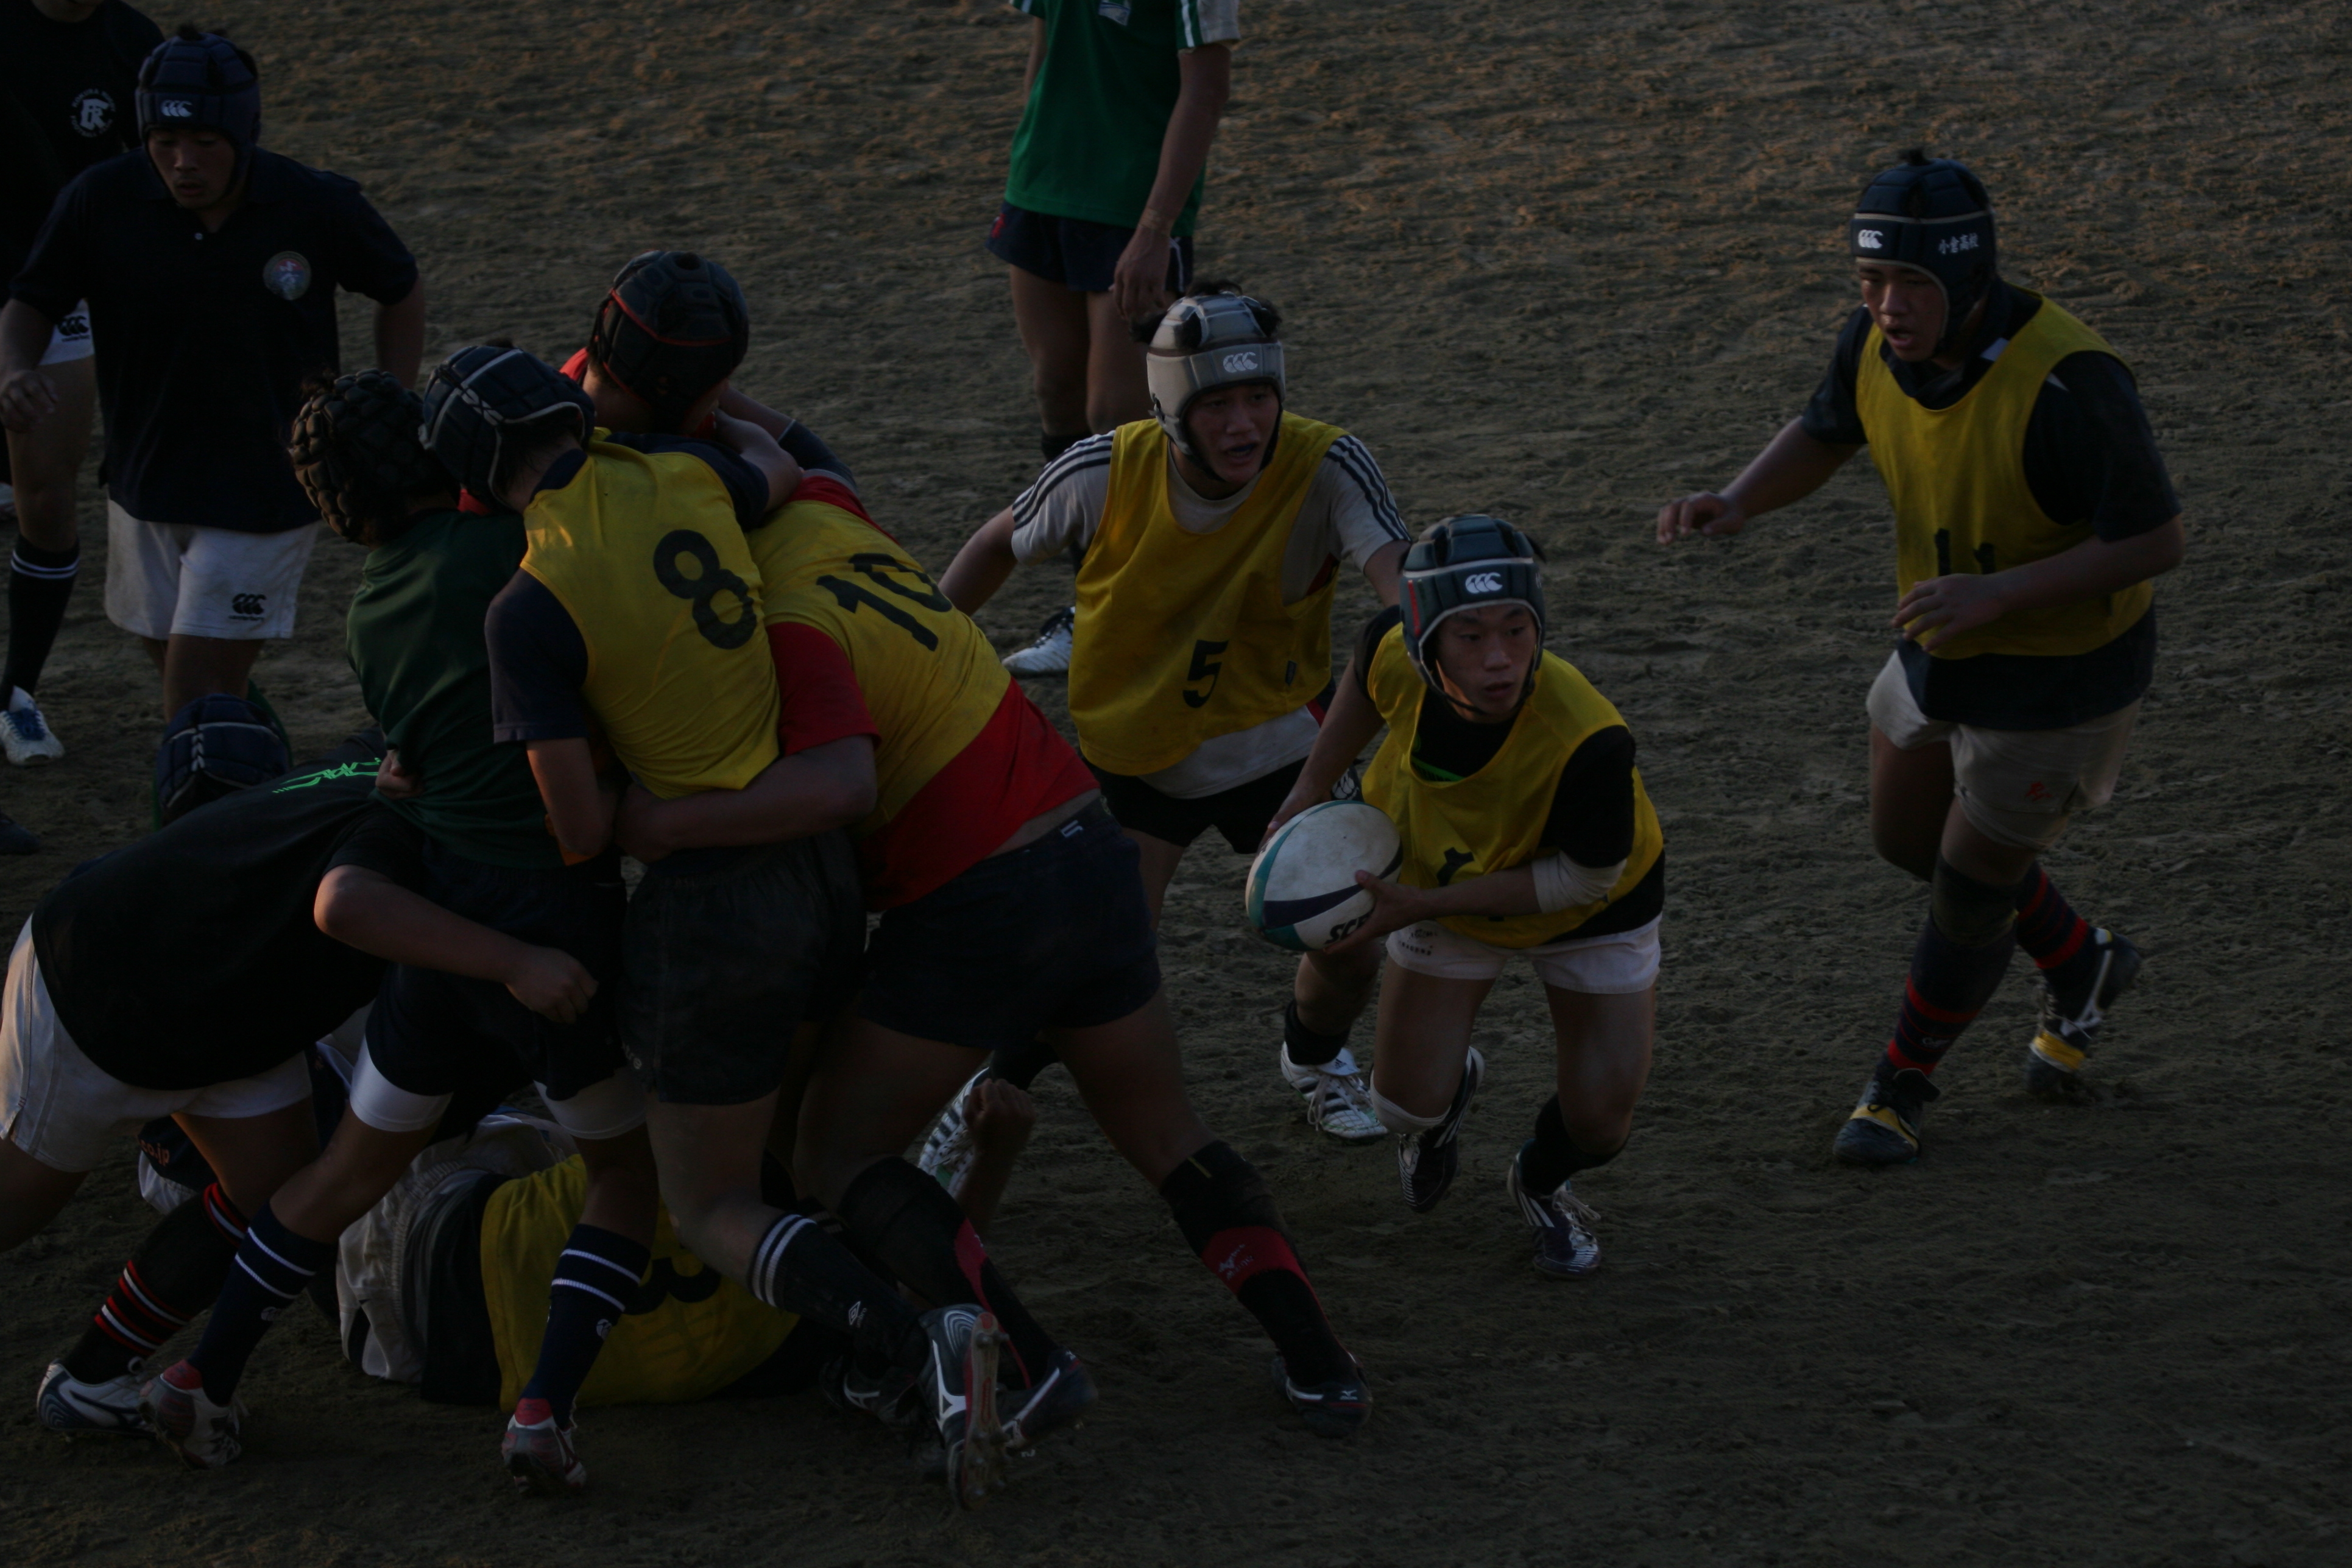 http://kokura-rugby.sakura.ne.jp/2011.11.3-1.JPG